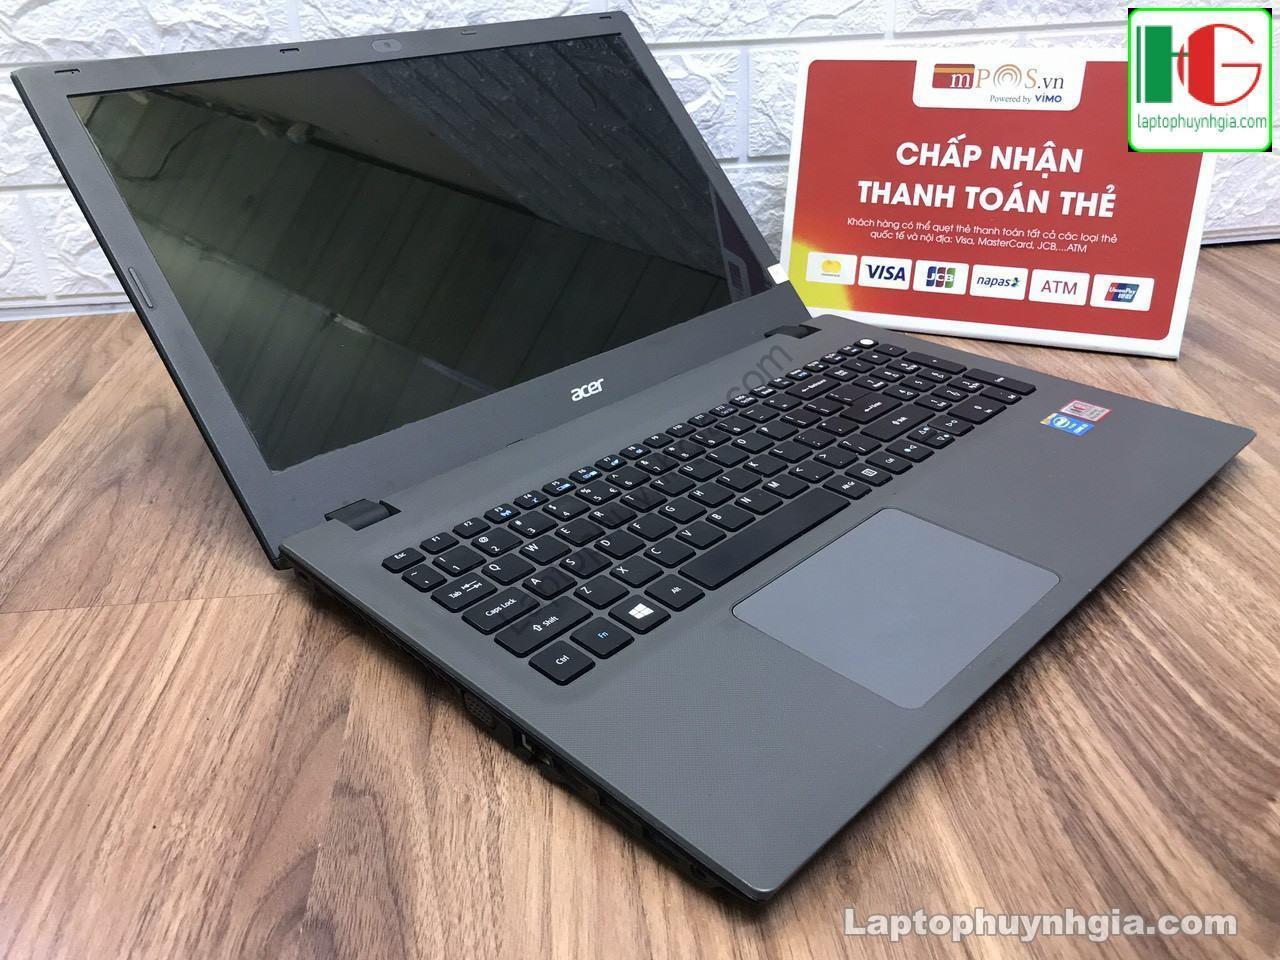 Laptop Acer E5 573 I3 4005u 4g 500g Lcd 15 Laptopcubinhduong.vn